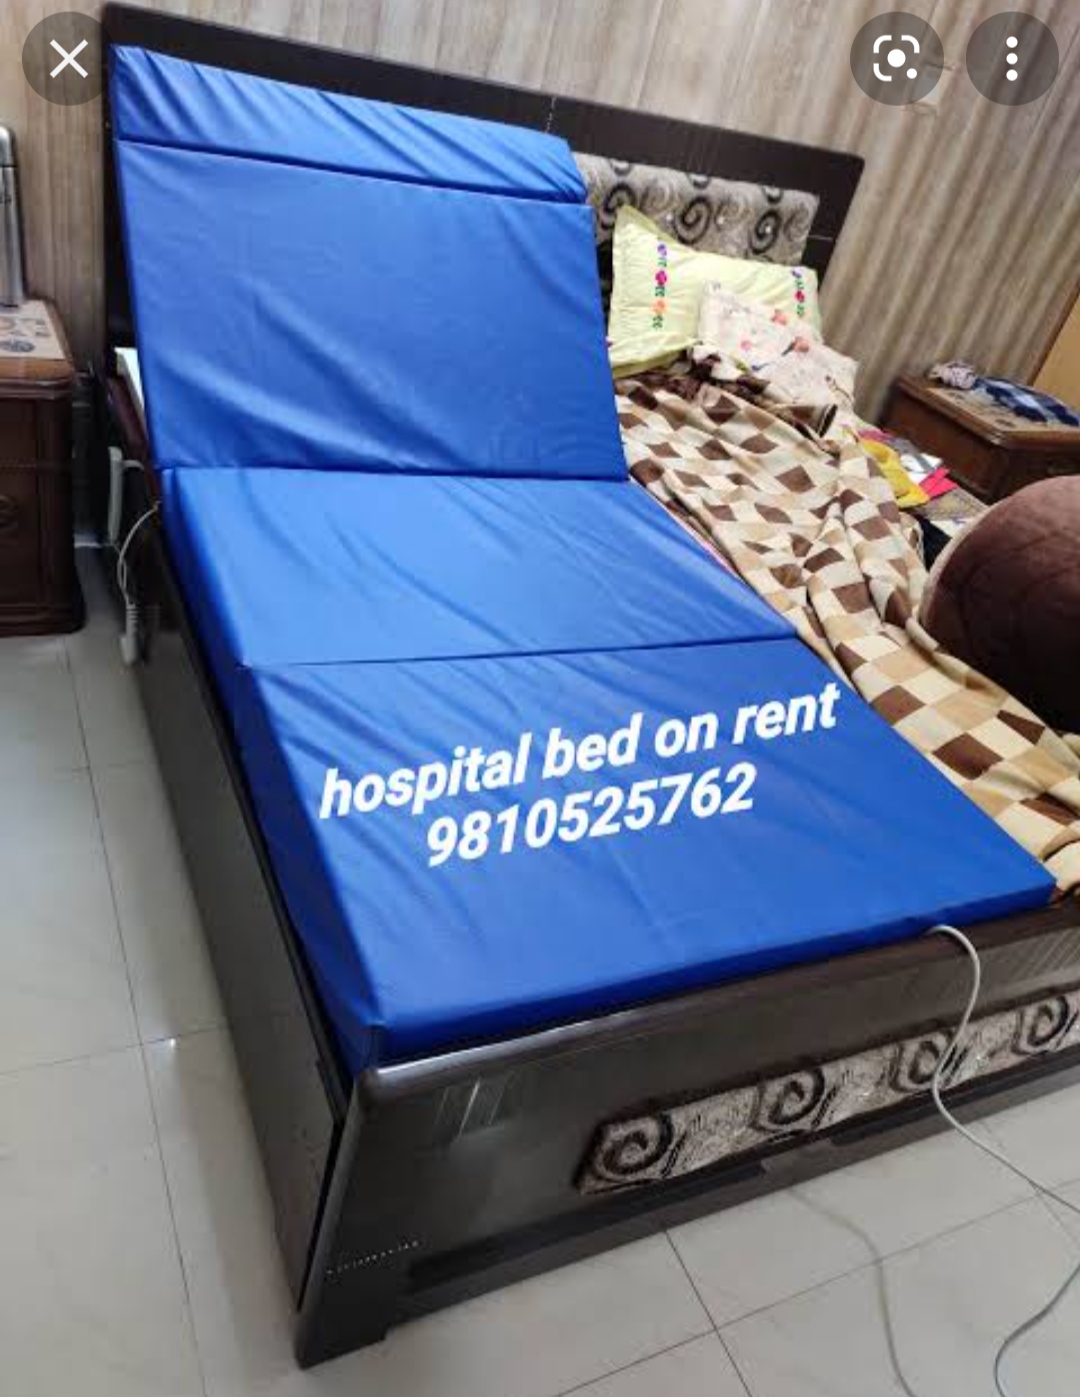 MOTORIZED RECLINER BED ON RENT IN DELHI 8178463439